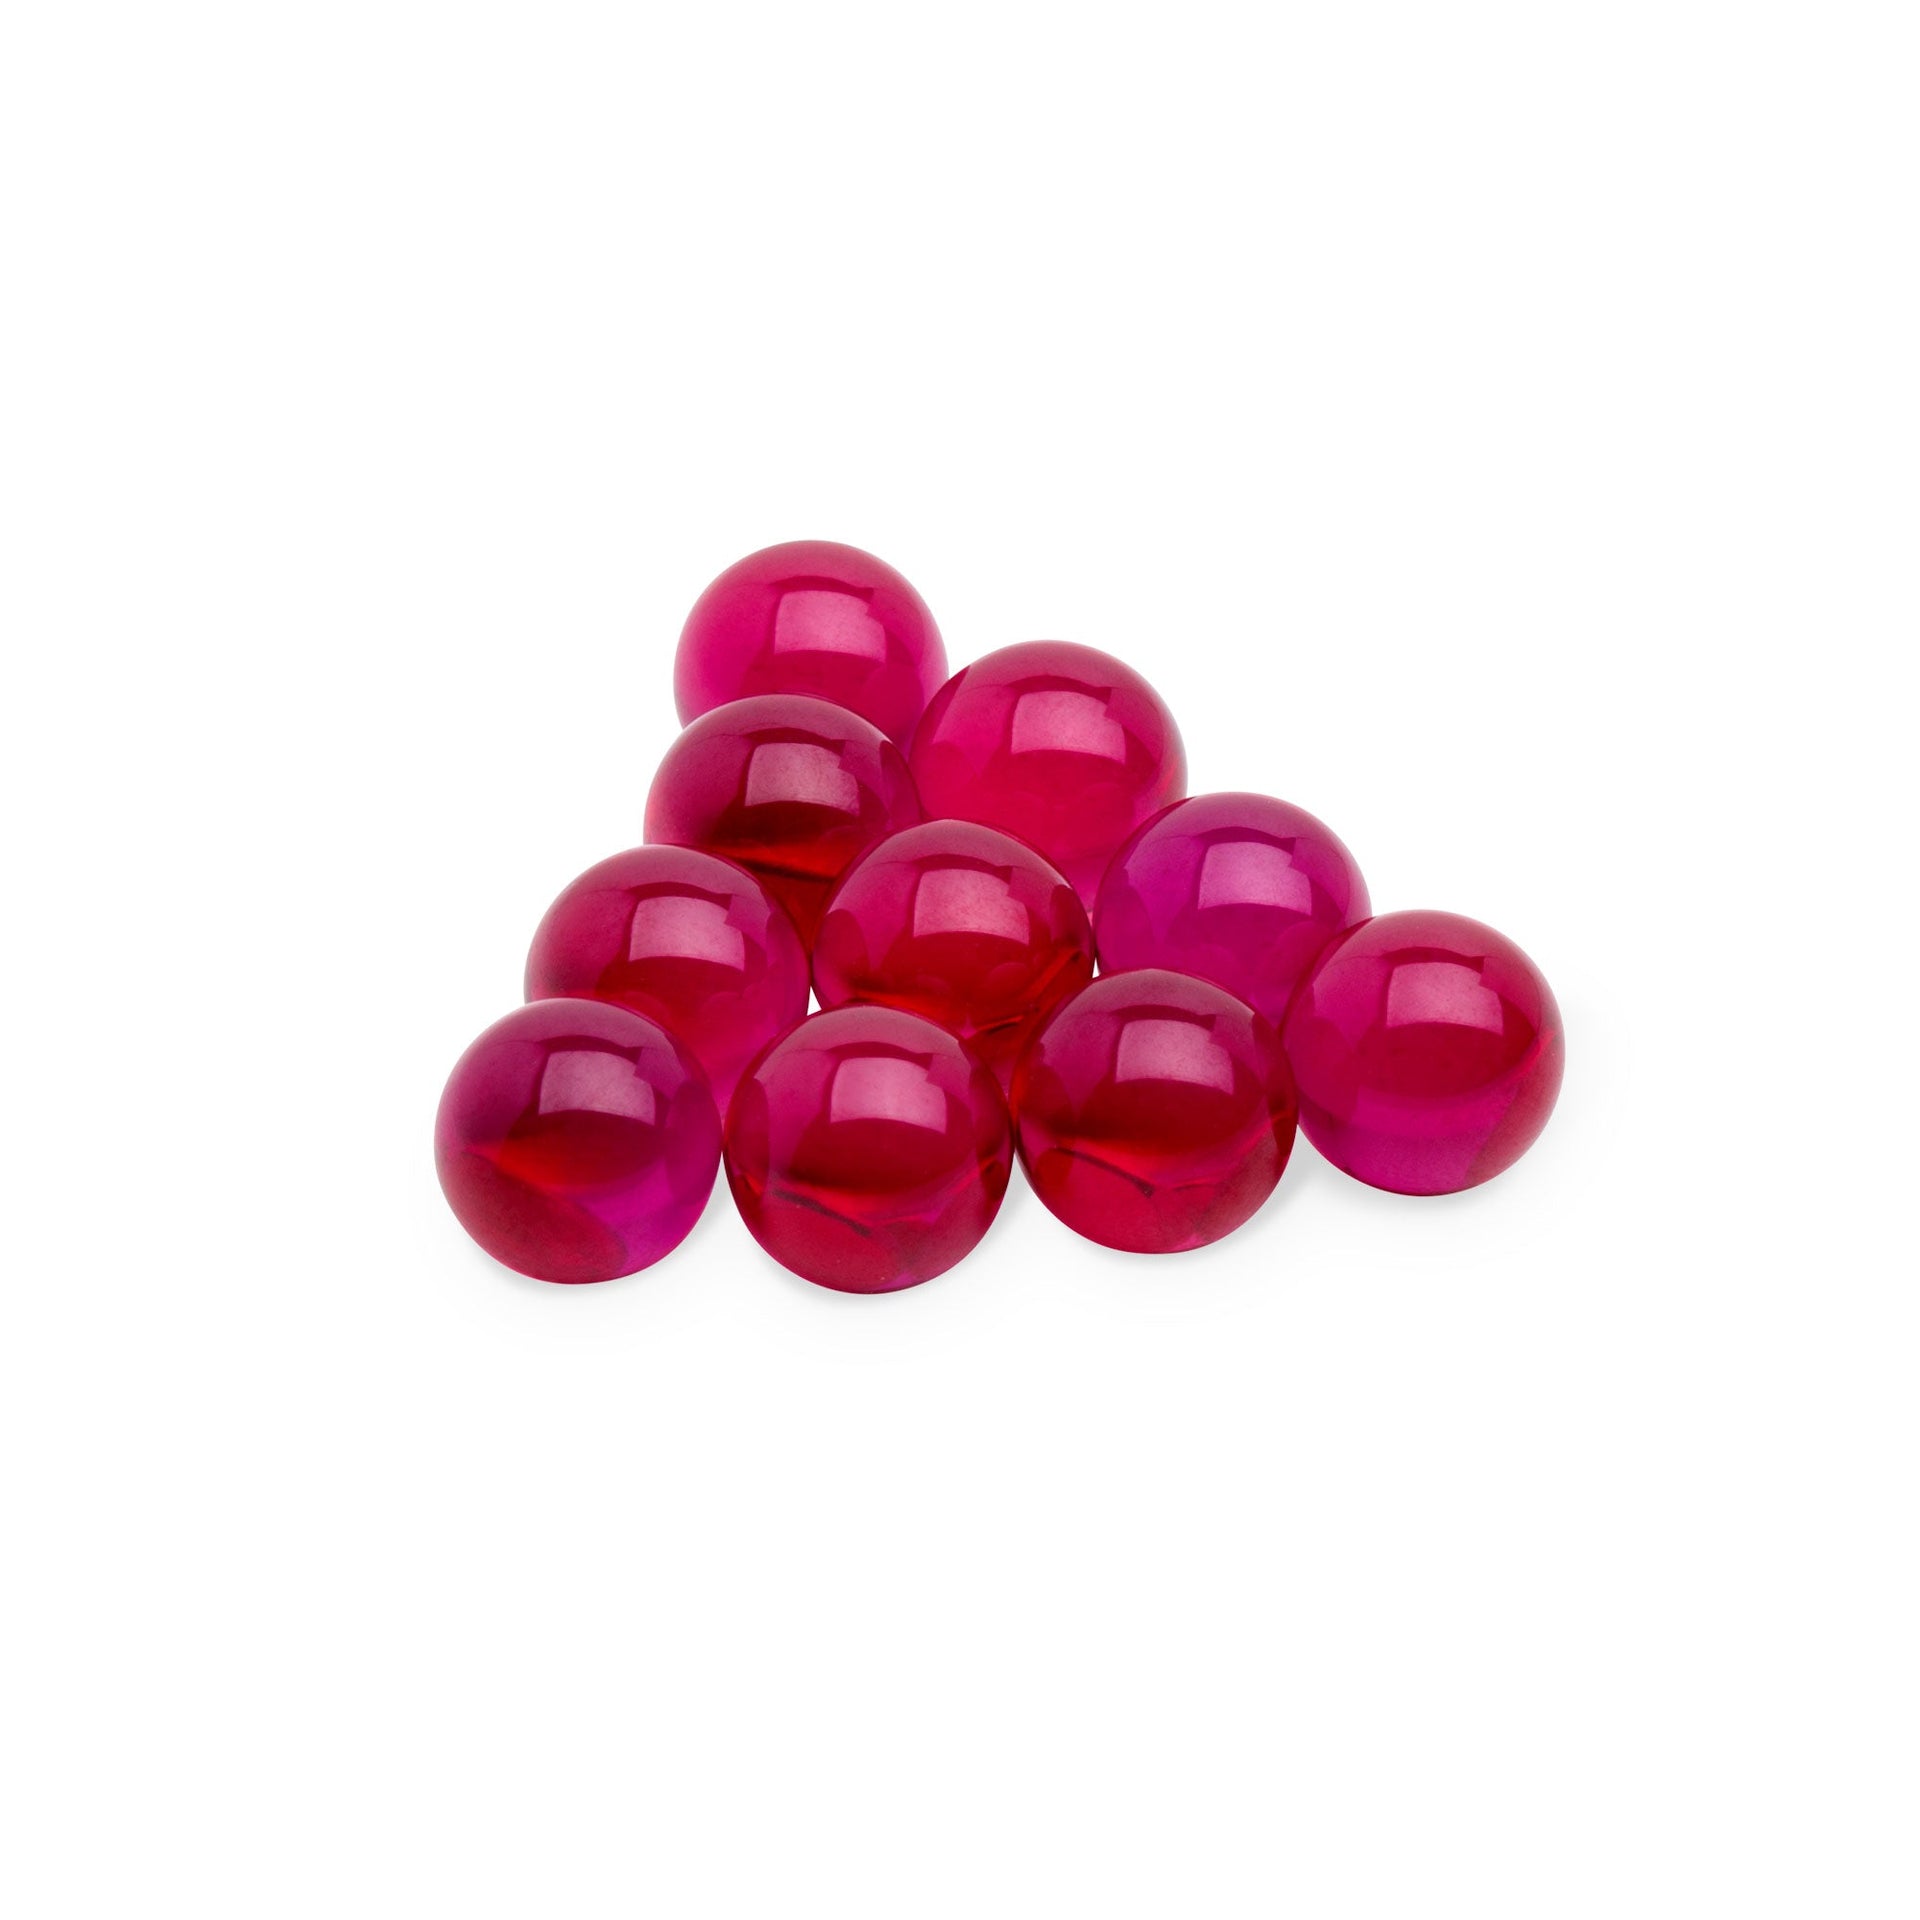 Terp Pearls Quartz Terp 3 Balls Set Dab Sphere Beads for Dabbing